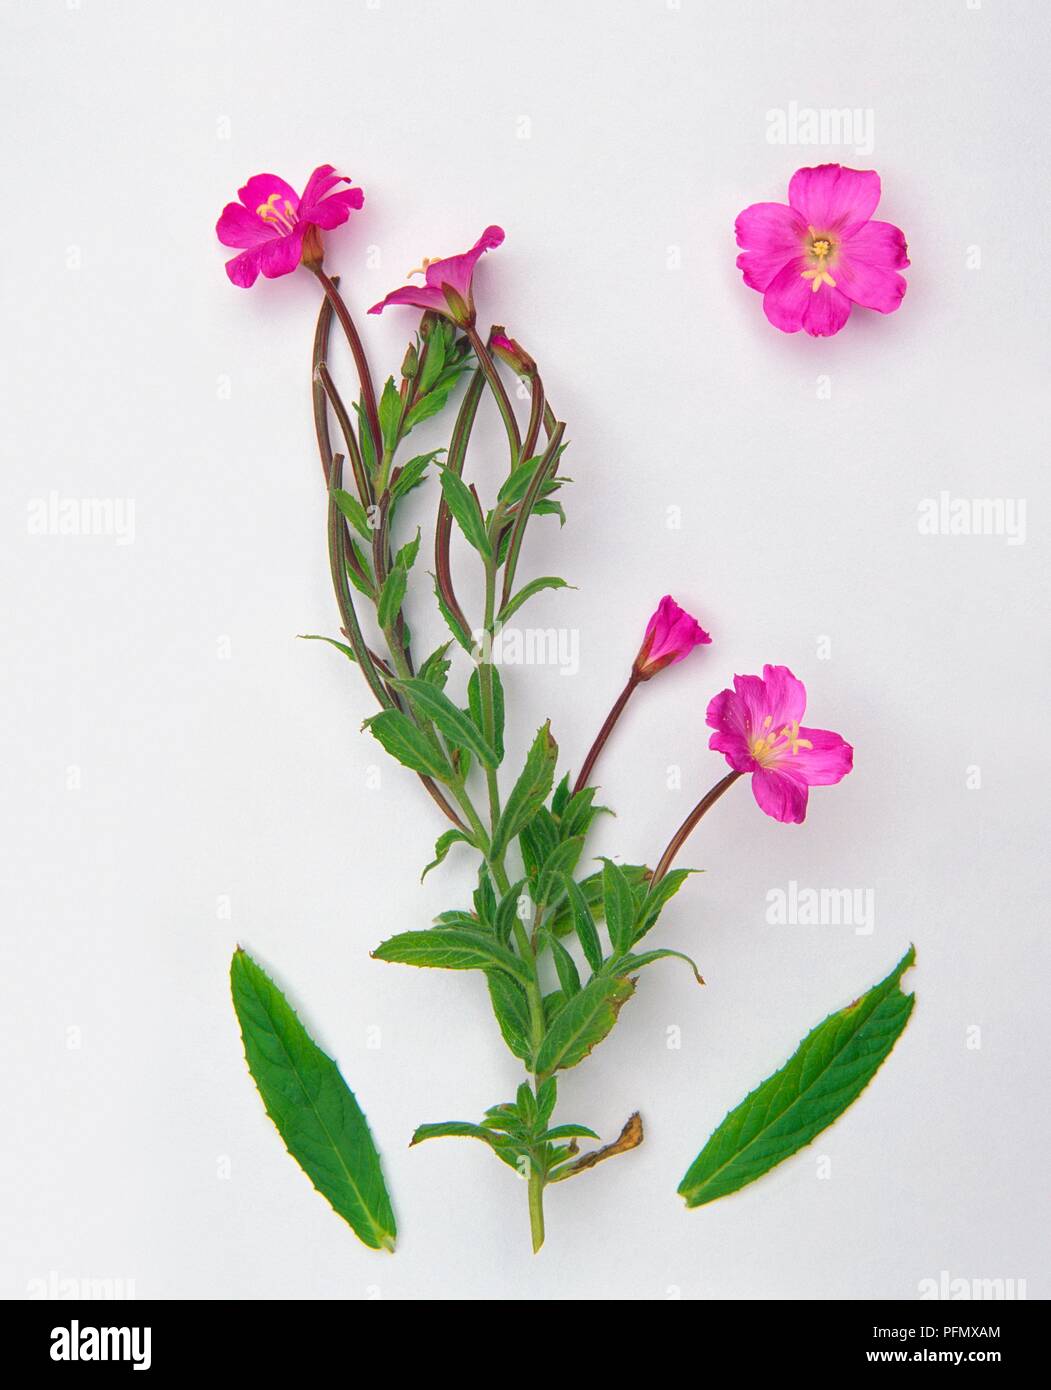 Epilobium hirsutum (Great willowherb) leaves and pink flowers Stock Photo